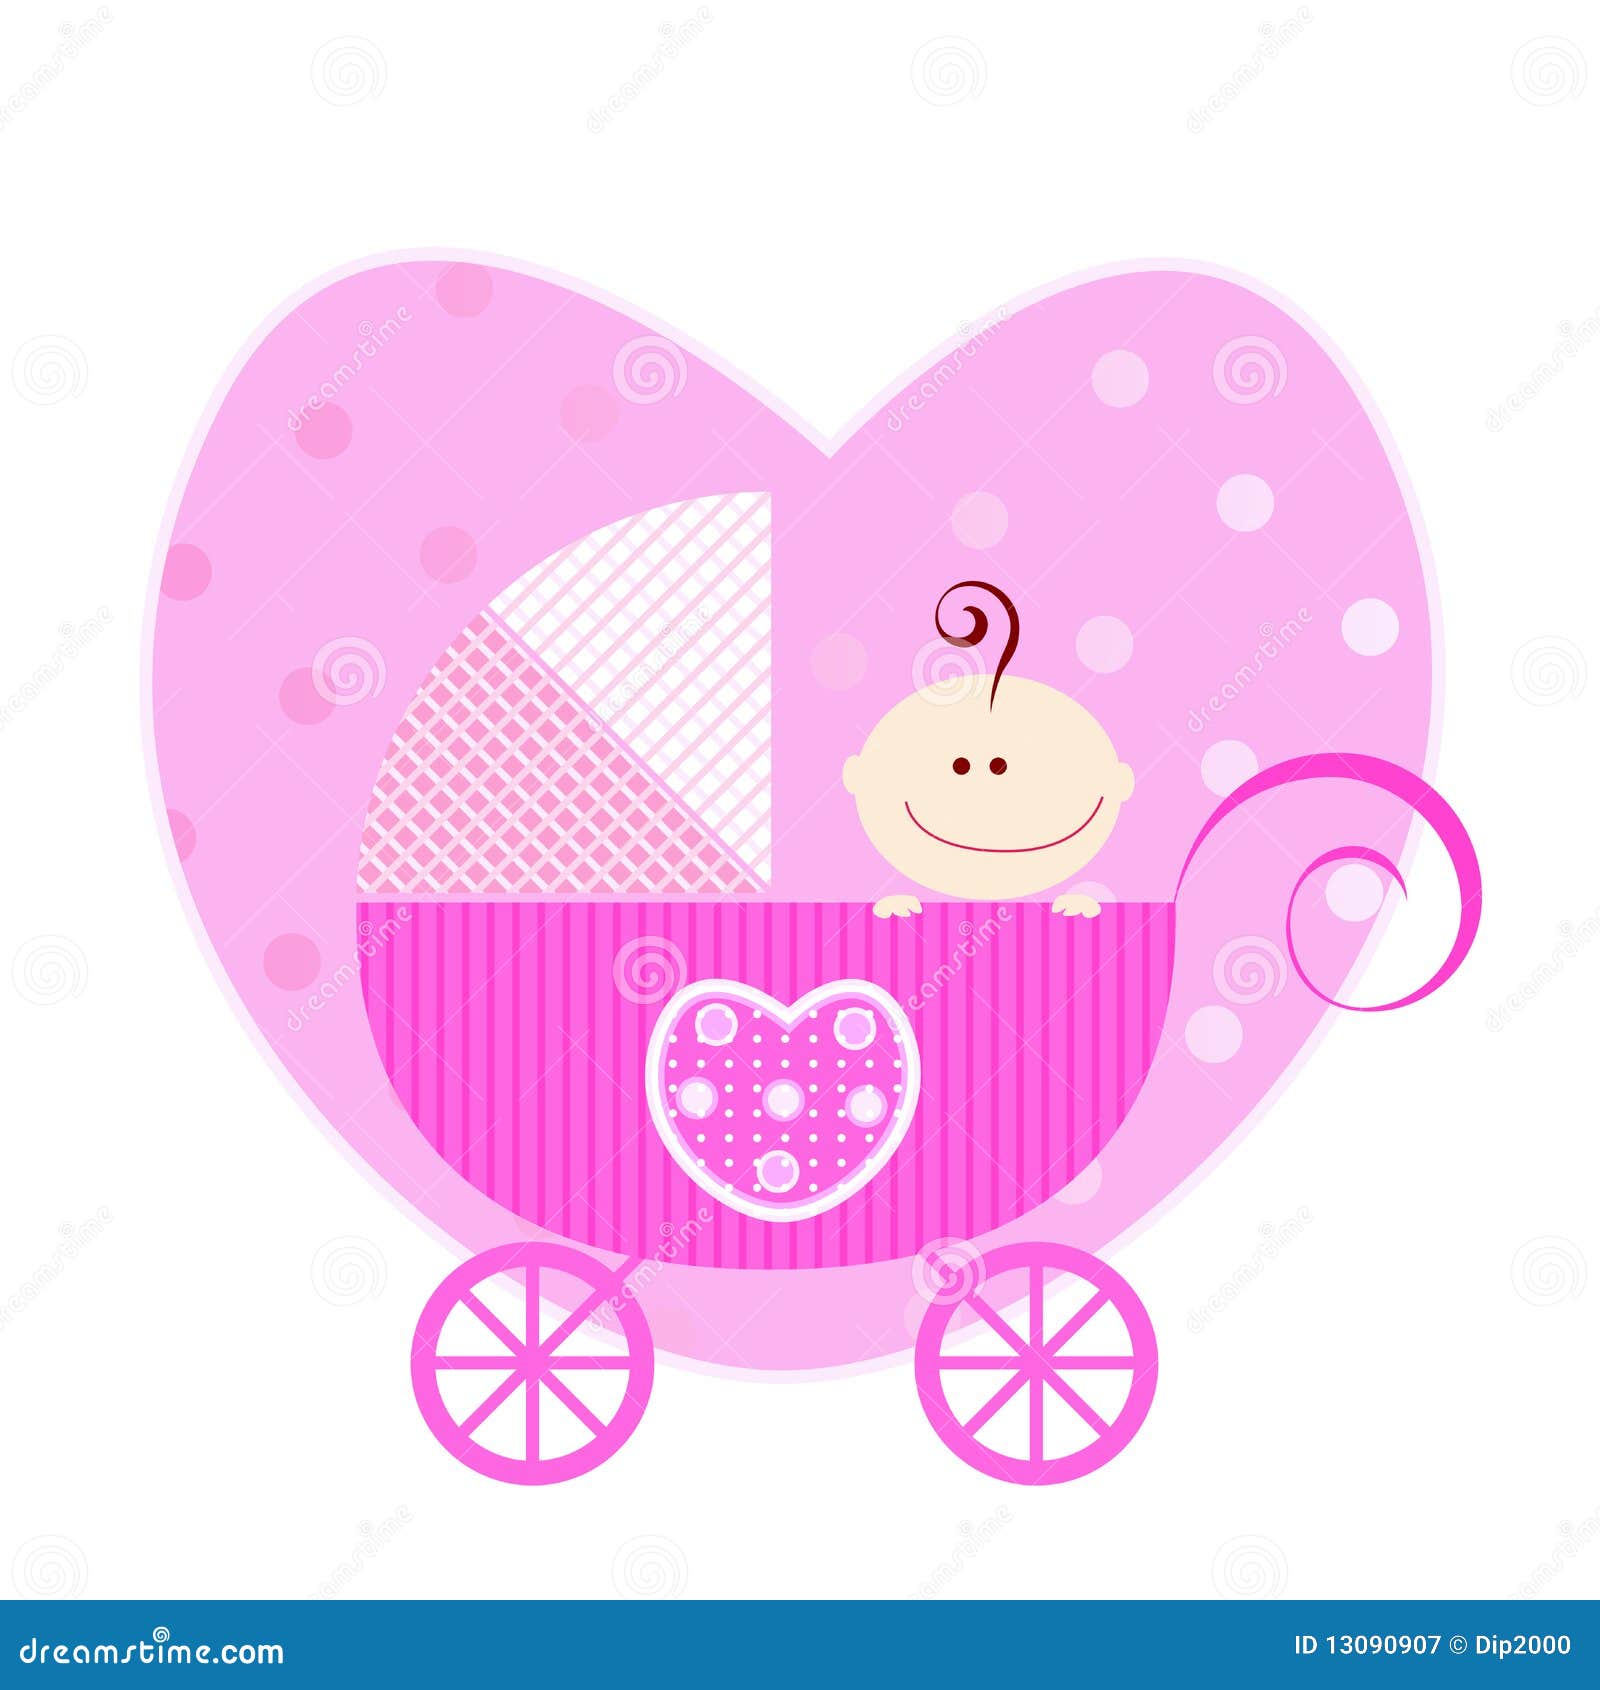 Baby announcement stock illustration. Illustration of artistic - 13090907